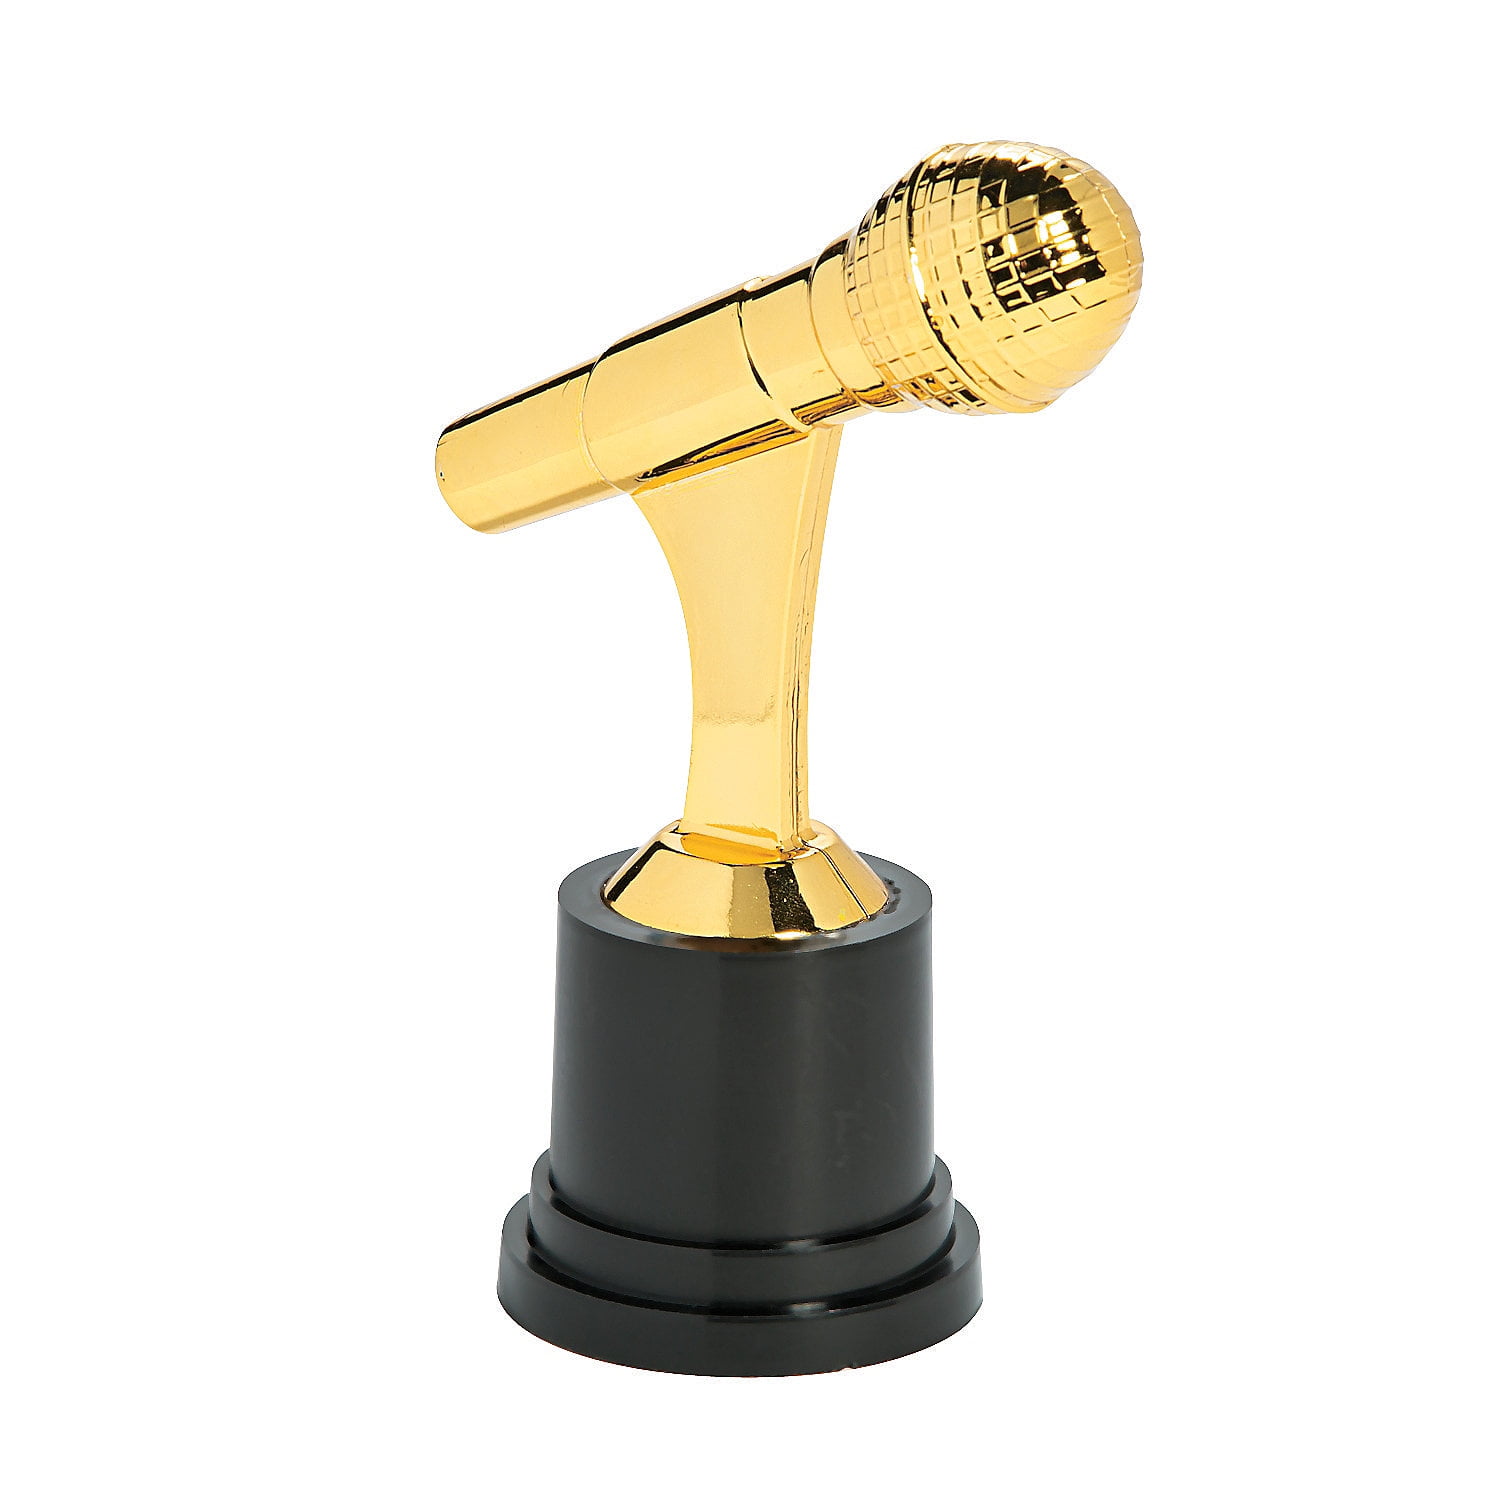 12 Pieces Stationery Fun Express Awards Trophies & Awards Great Job Award Trophies 